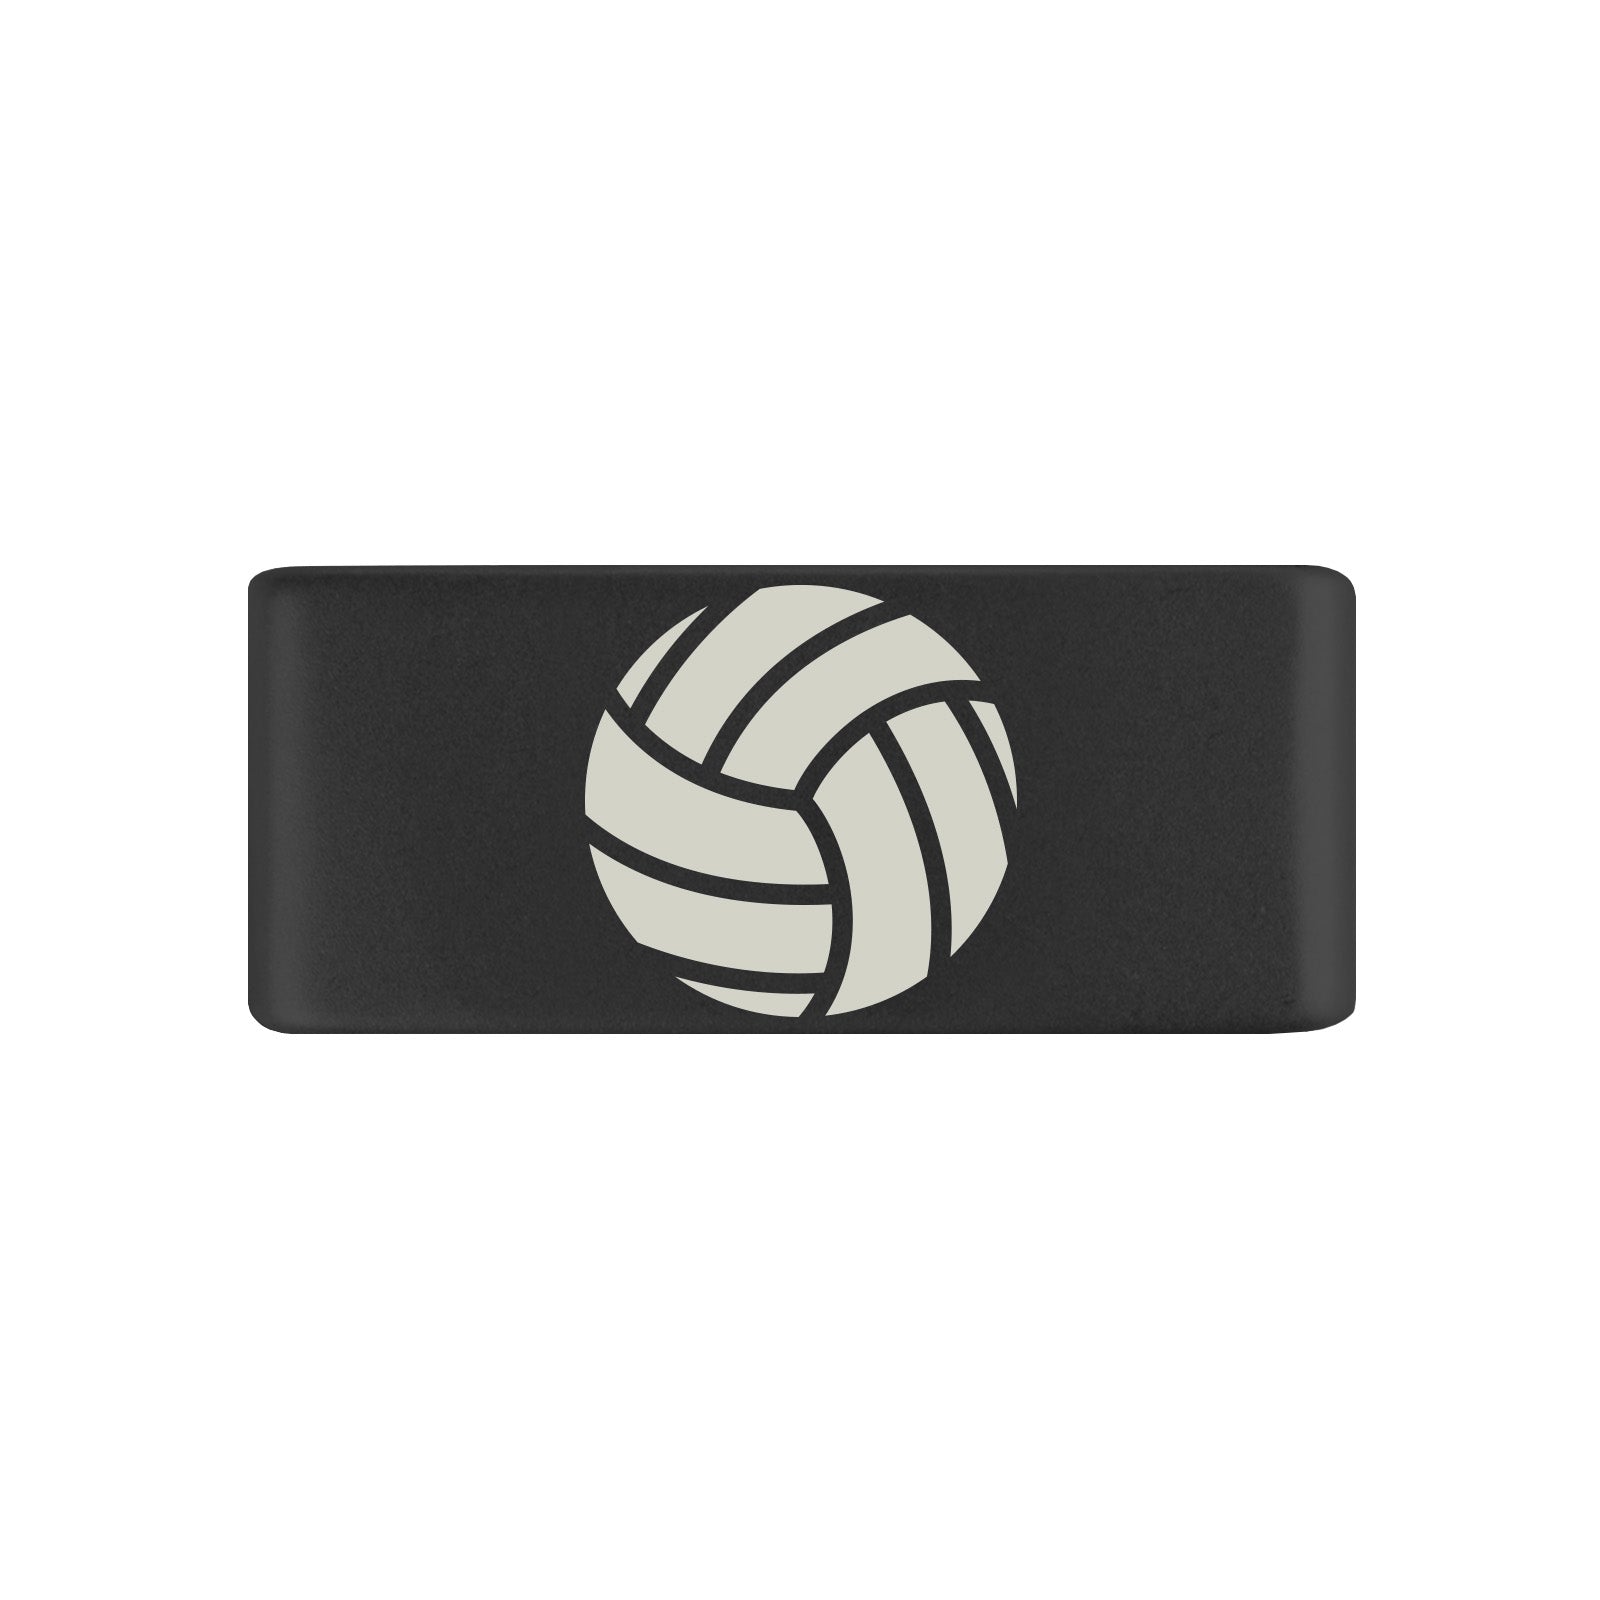 Volleyball Badge Badge 13mm - ROAD iD